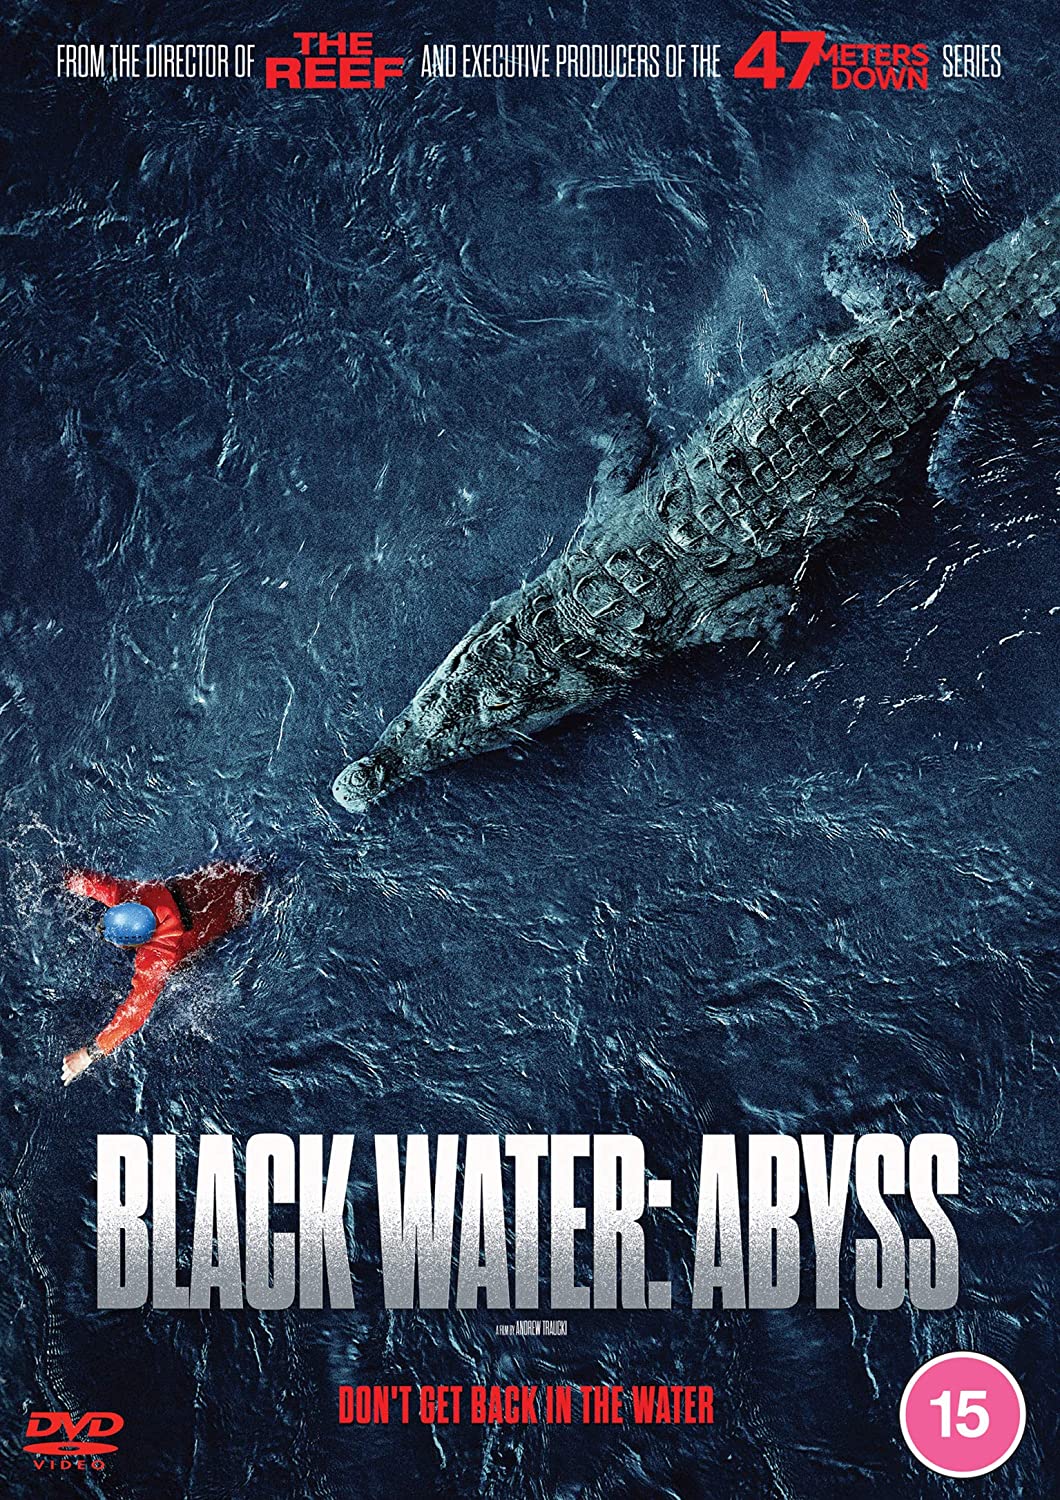 Black Water Abyss DVD Artwork